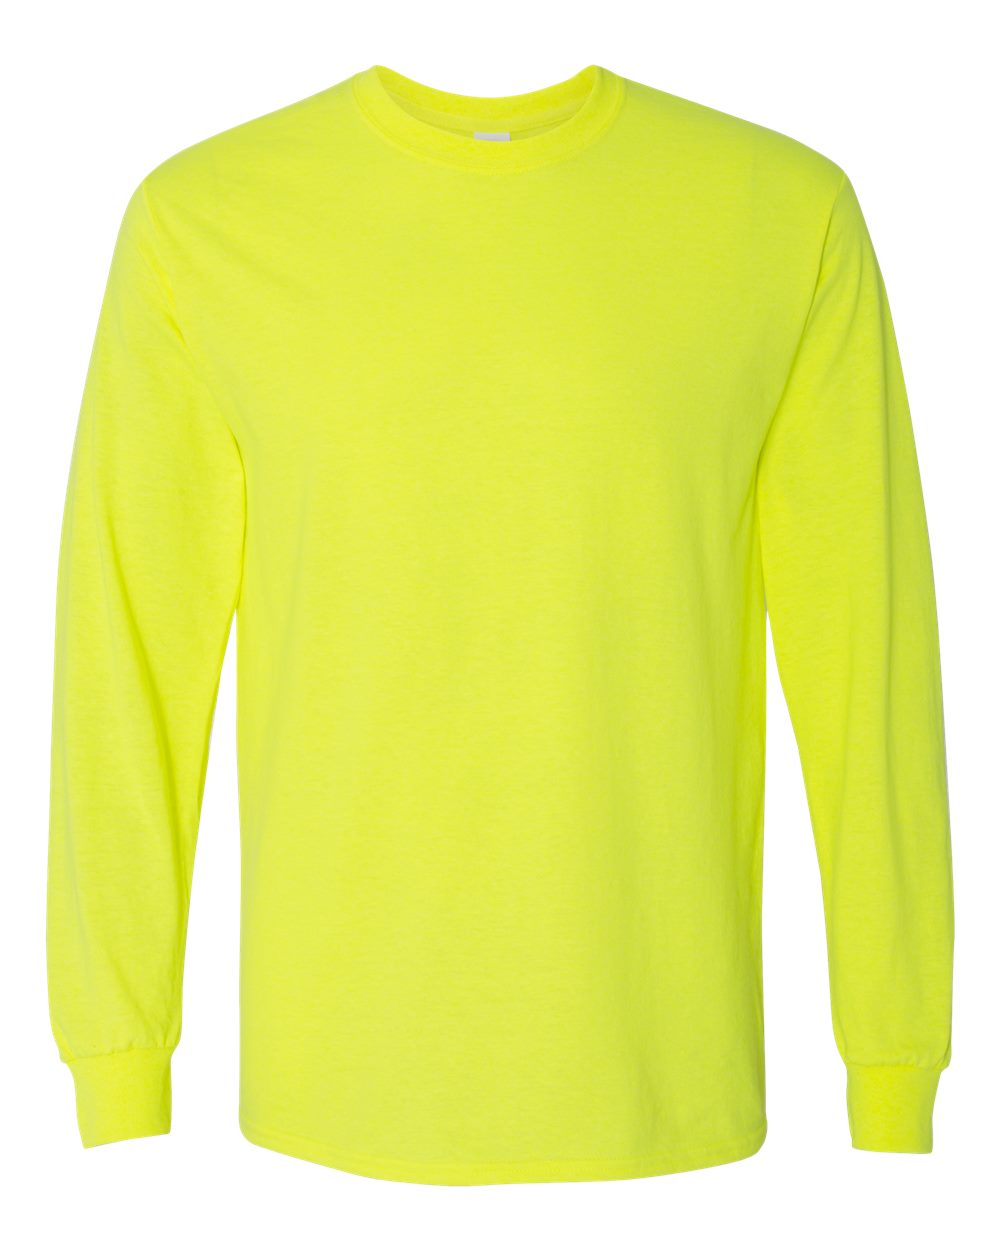 Pretreated Gildan 5400 Heavy Cotton Long Sleeve T-Shirt - Safety Green